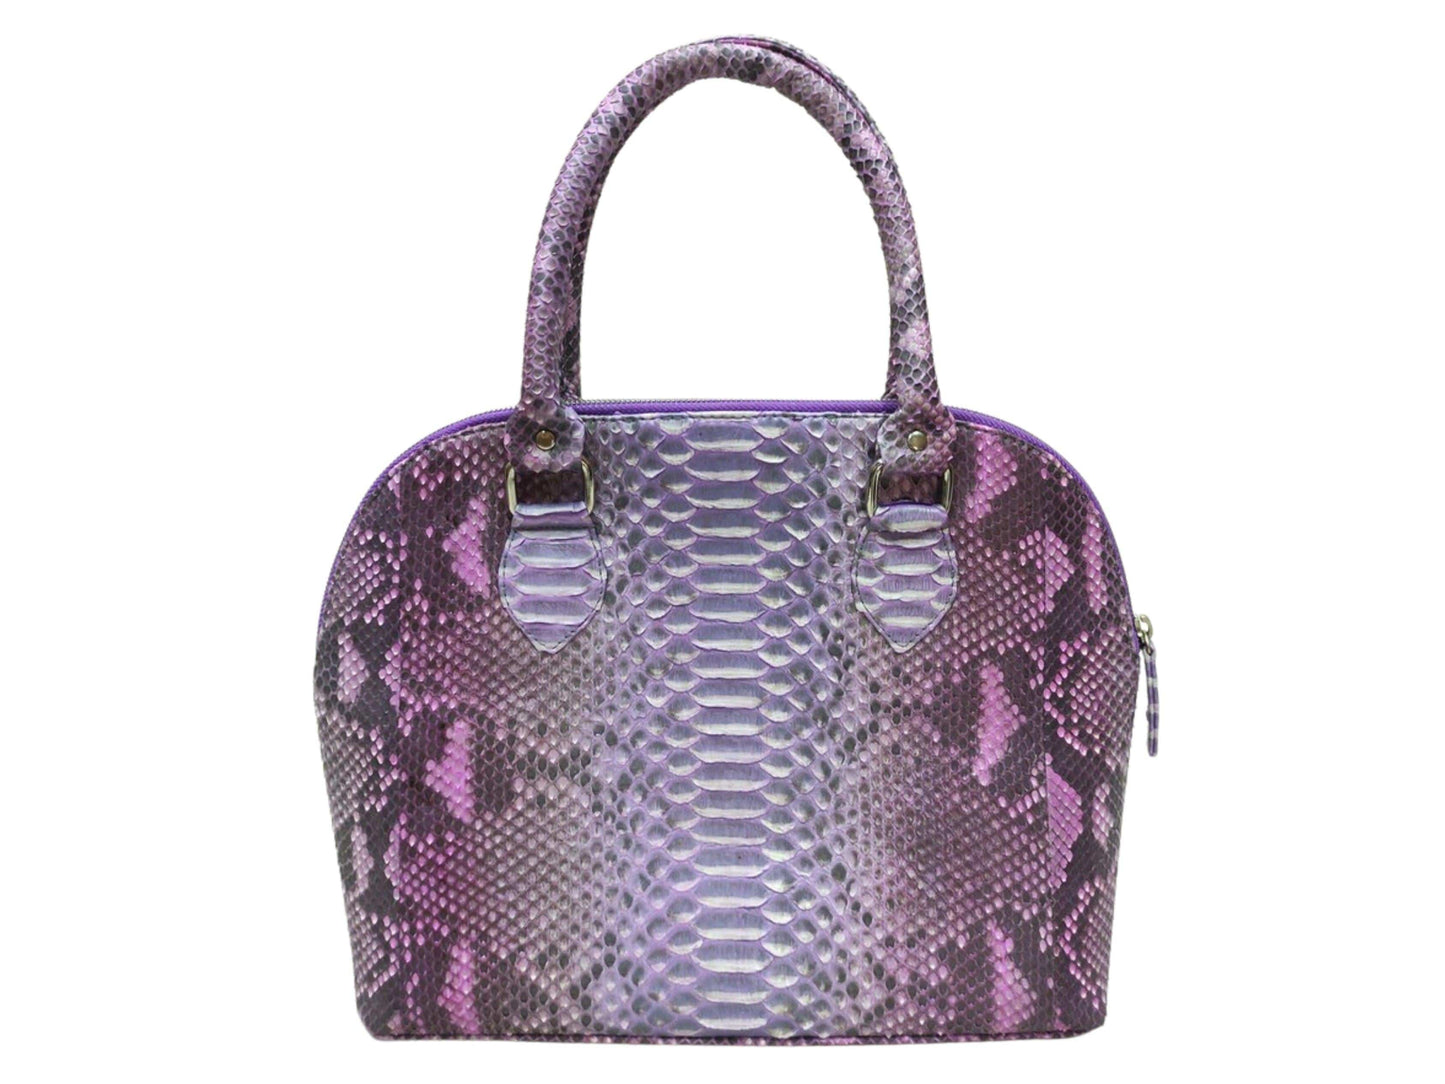 Laptop Bags Snakeskin Tote Laptop Bag,Trendy Work Bag,Fashionable Carryall Pink Python Jacket by LFM Fashion